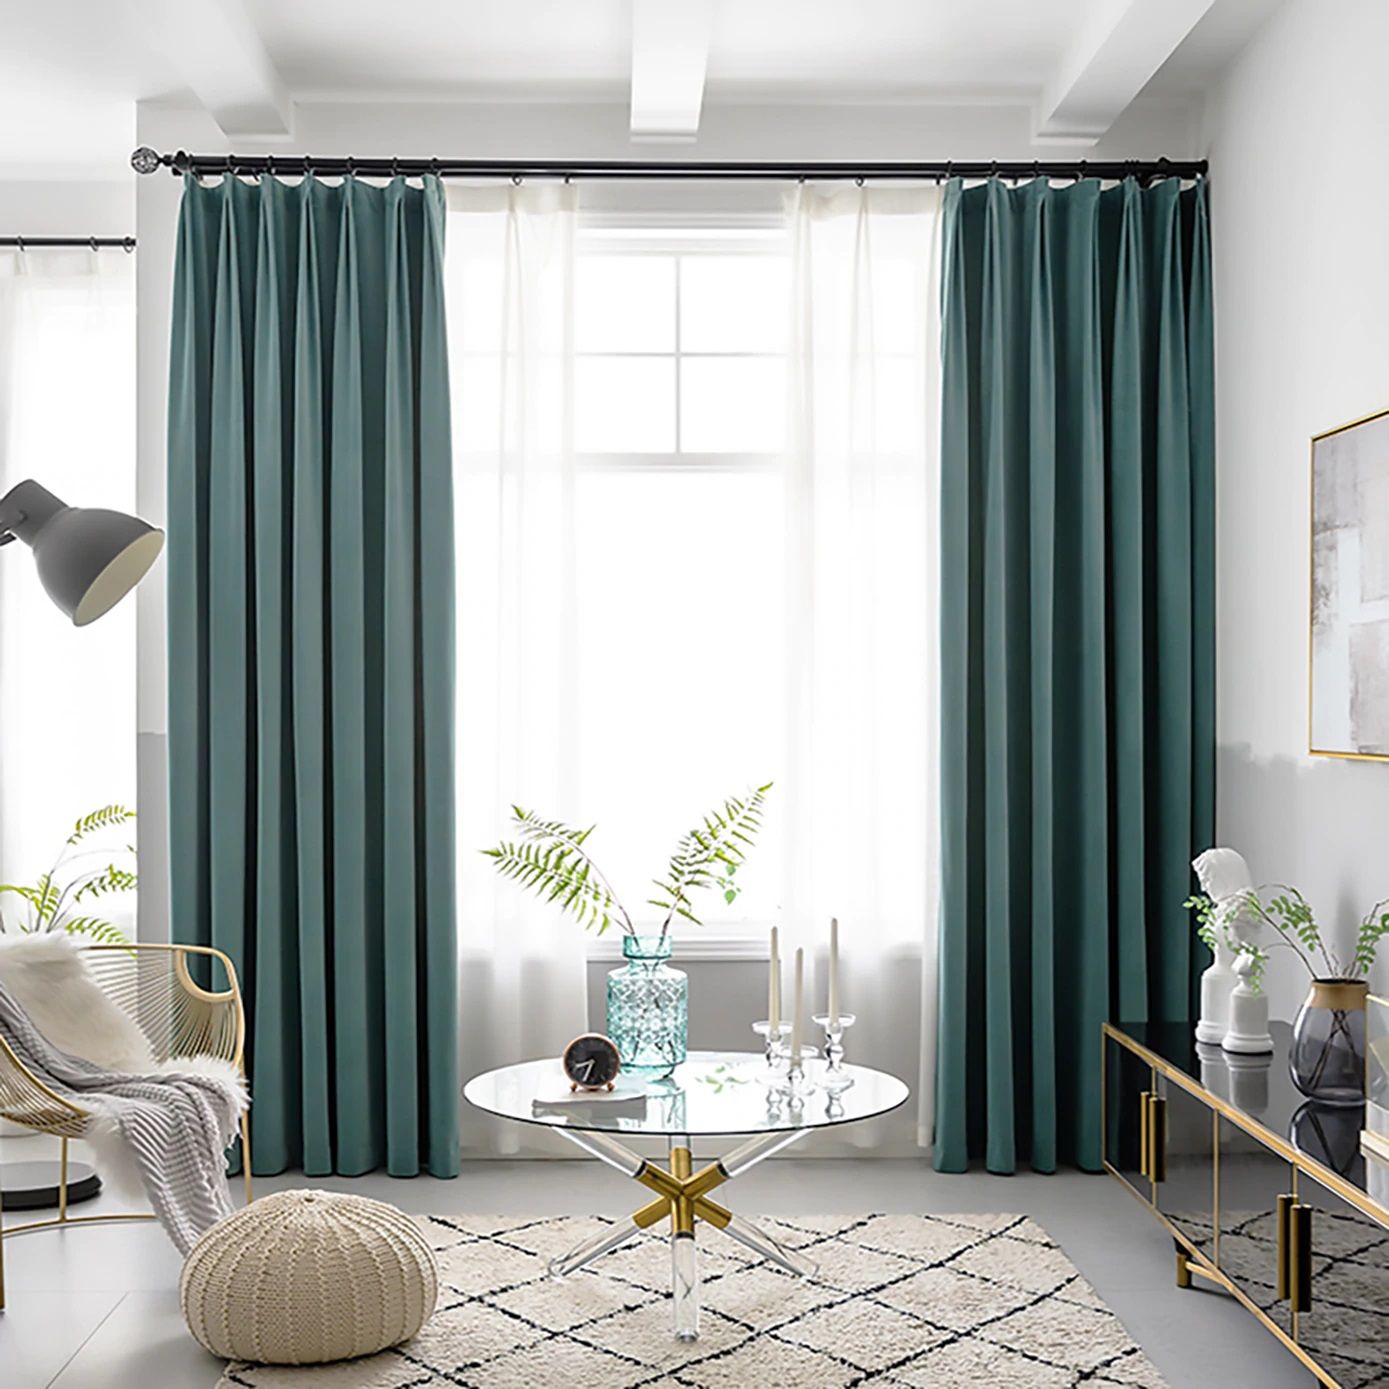 Modern Curtain Ideas: 12 Charming And Contemporary Curtain Designs